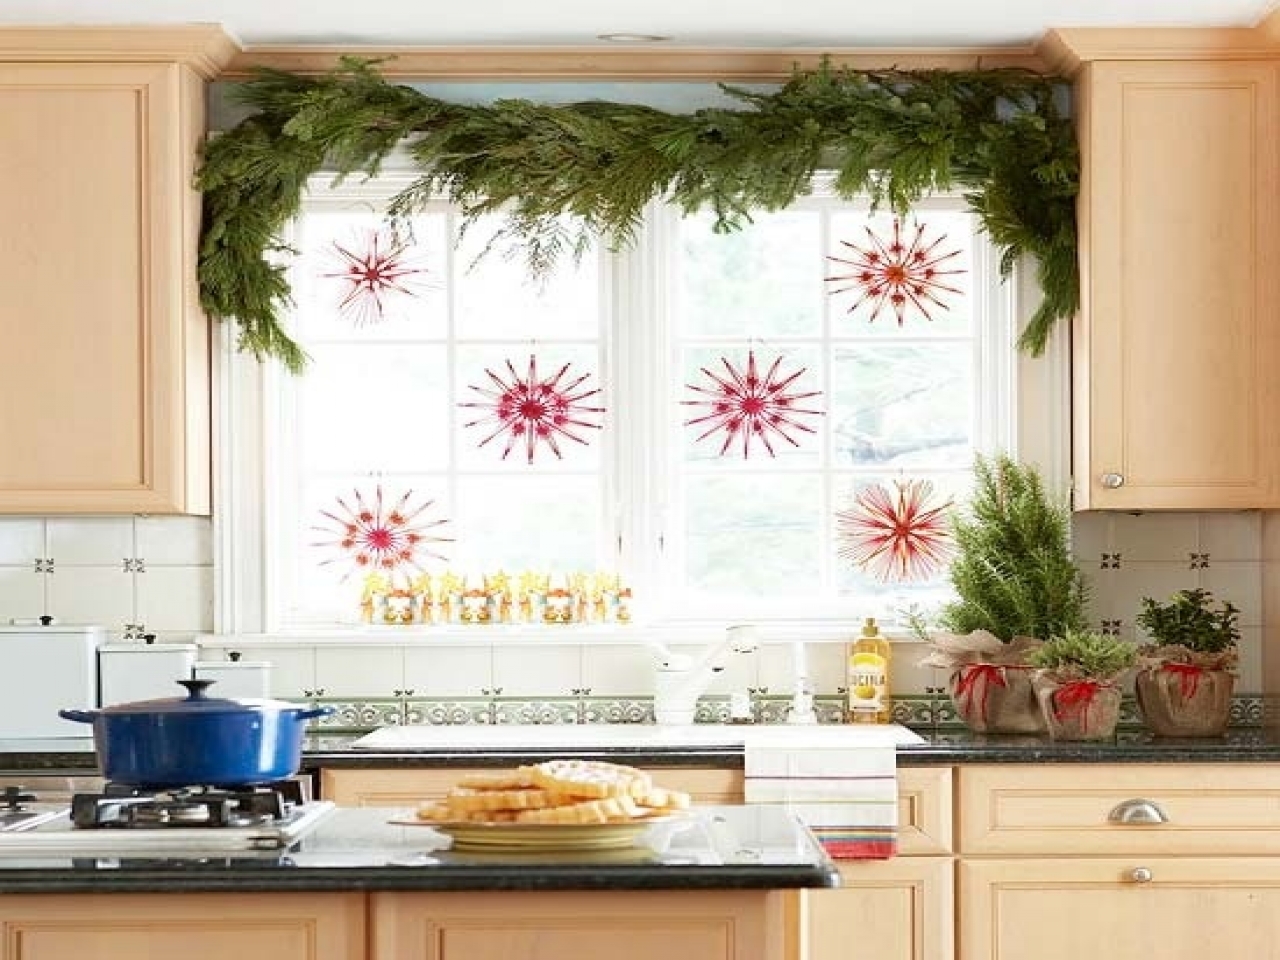 Christmas kitchen window in Kitchen Christmas Decoration Ideas | LovelySpaces.com